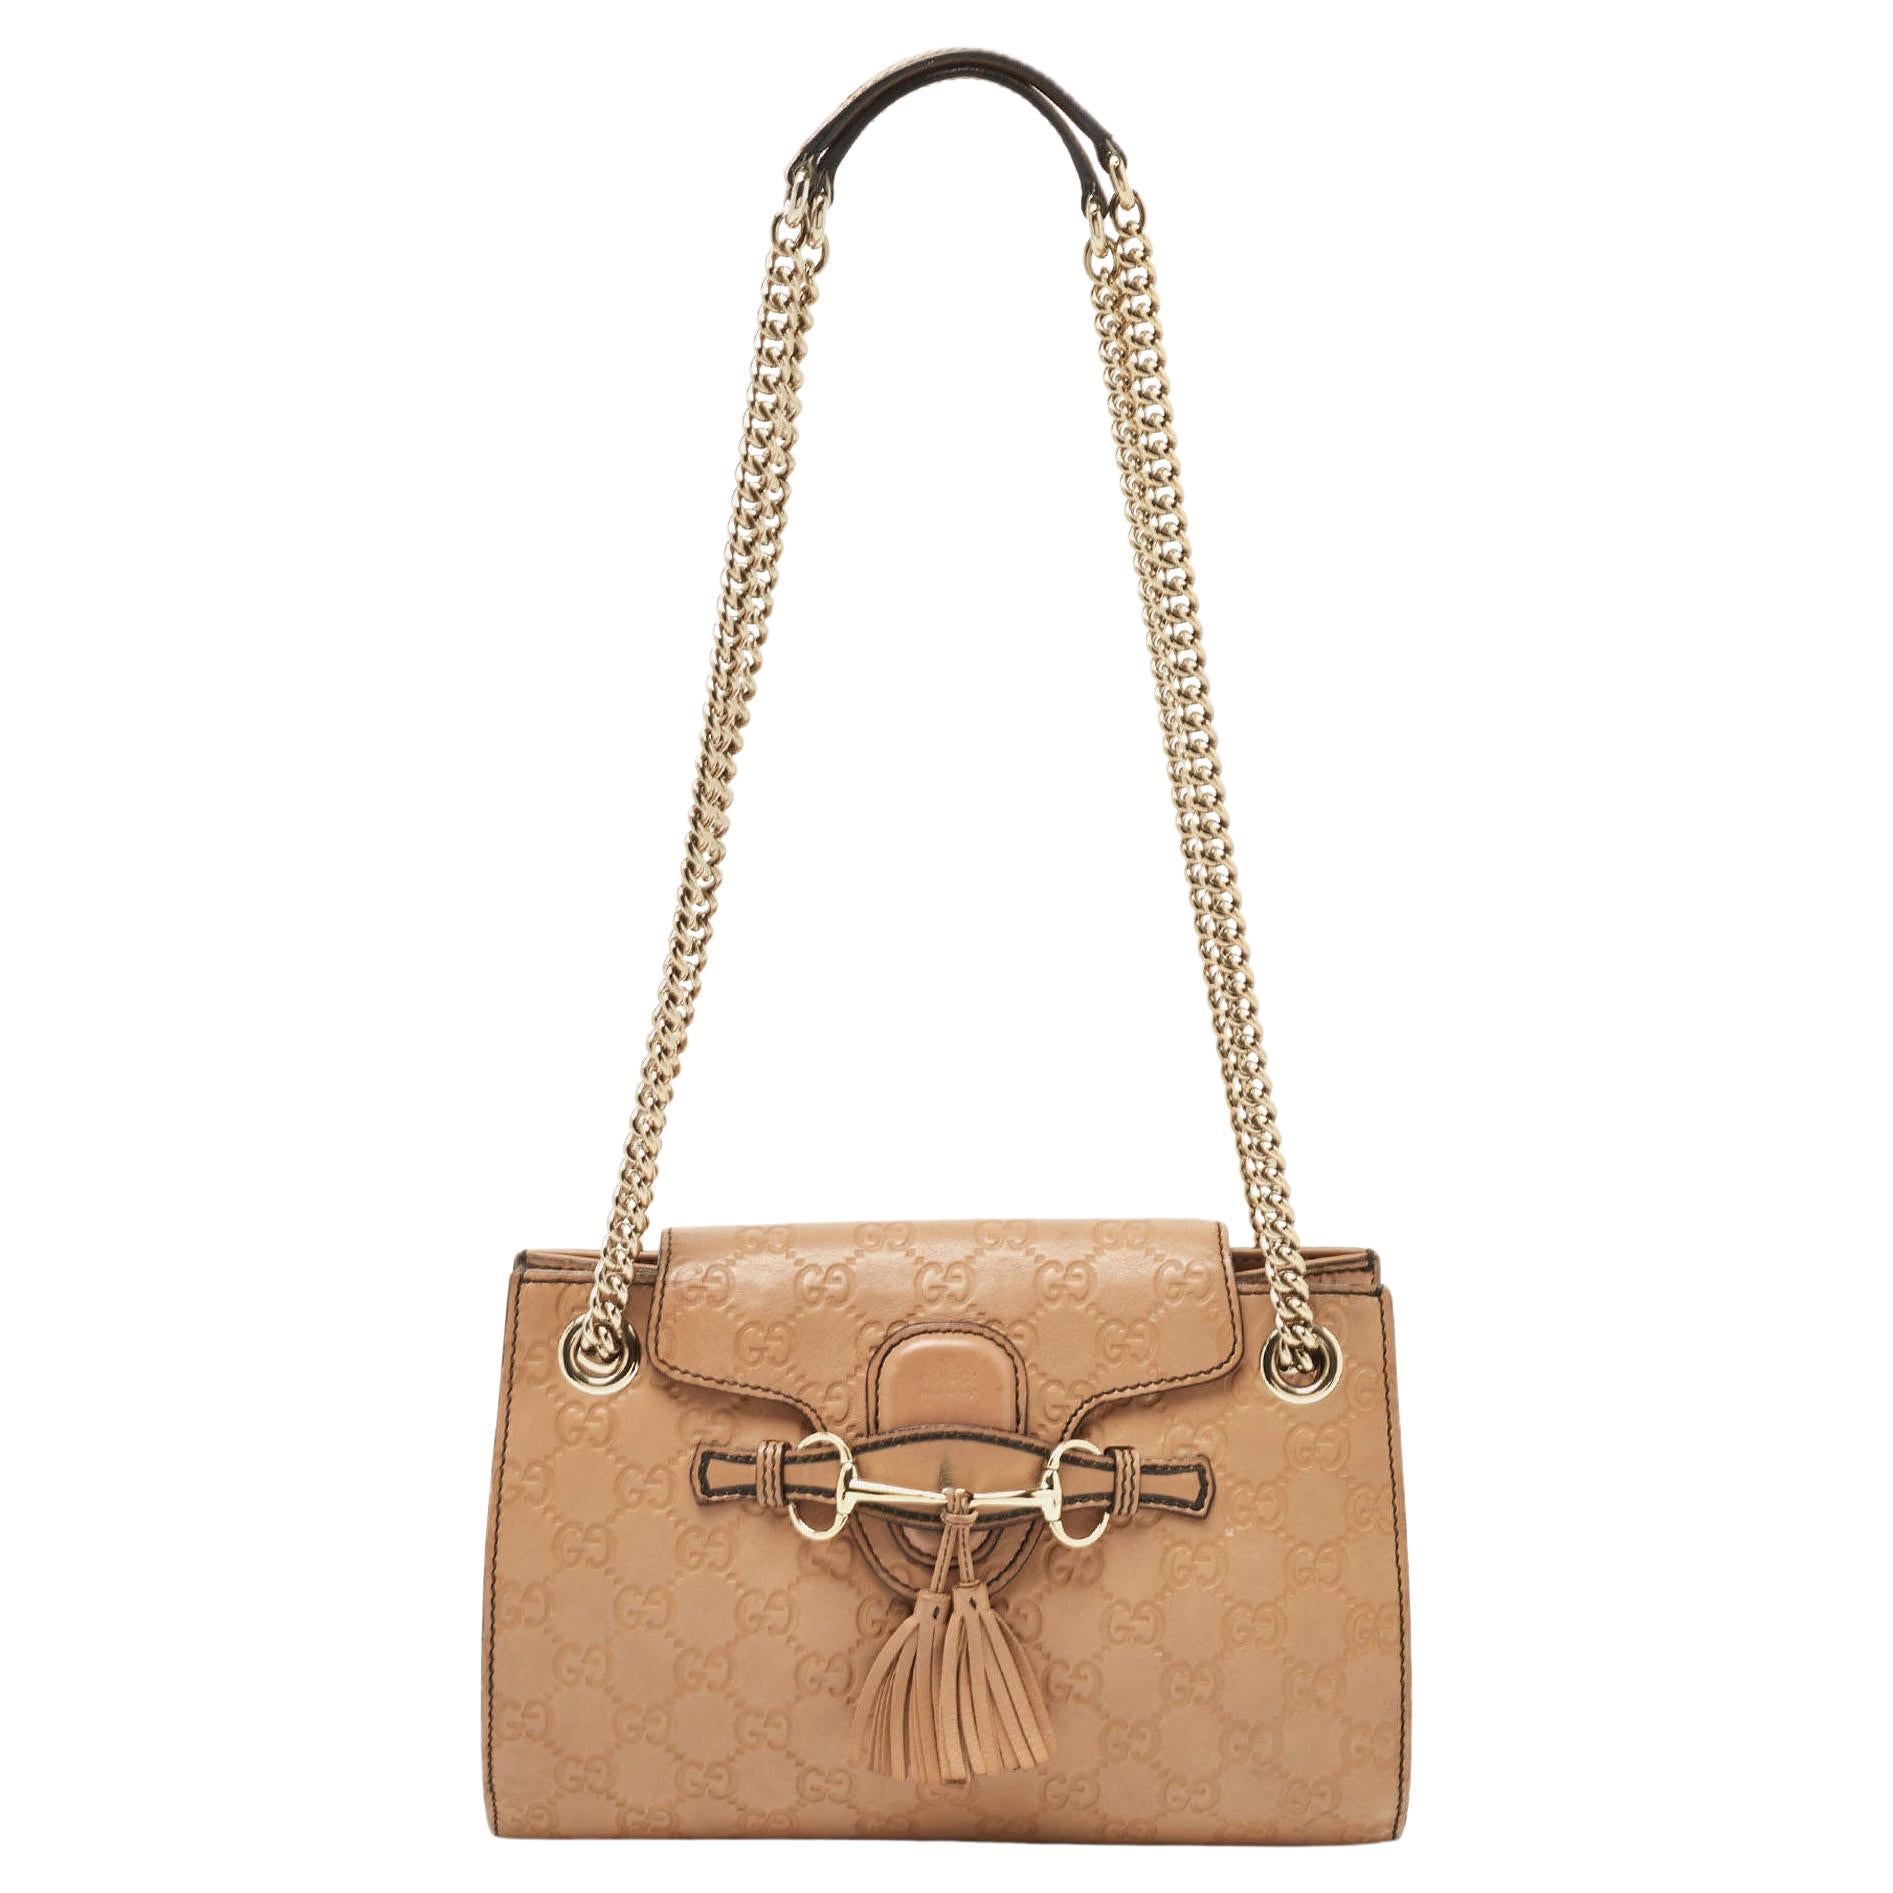 Gucci Beige Guccissima Leather Small Emily Chain Shoulder Bag